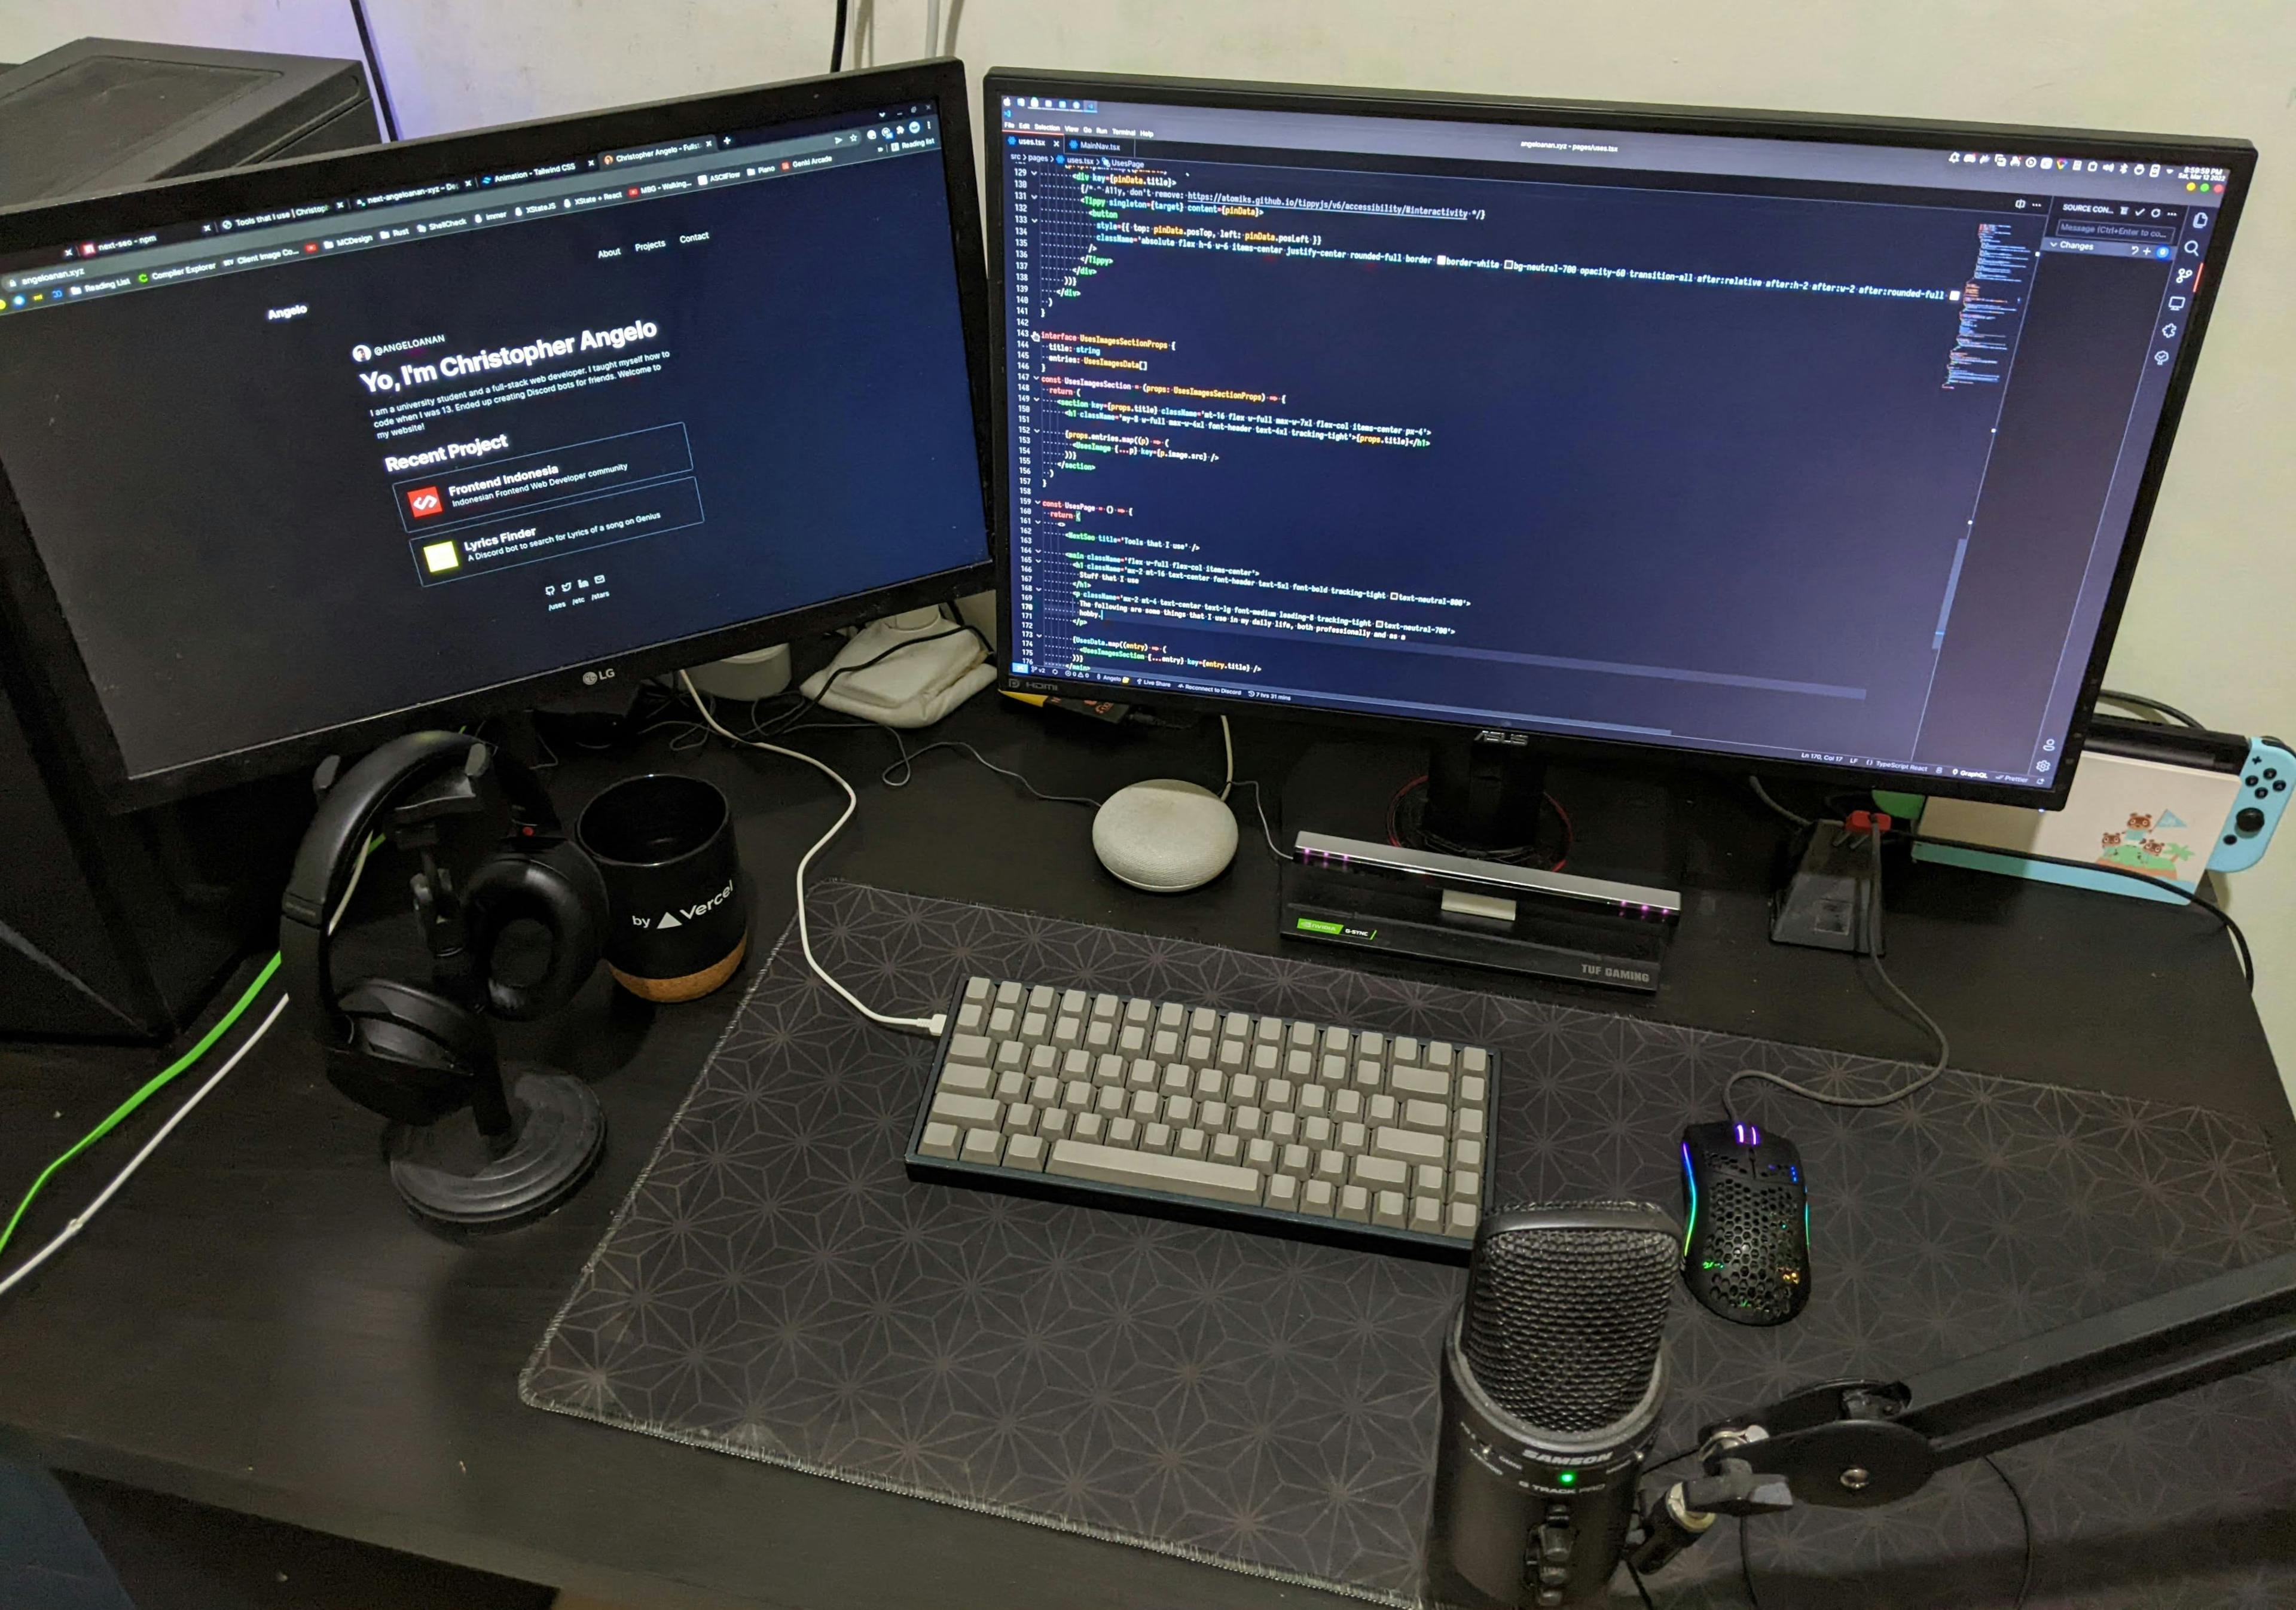 Angelo's main desktop setup